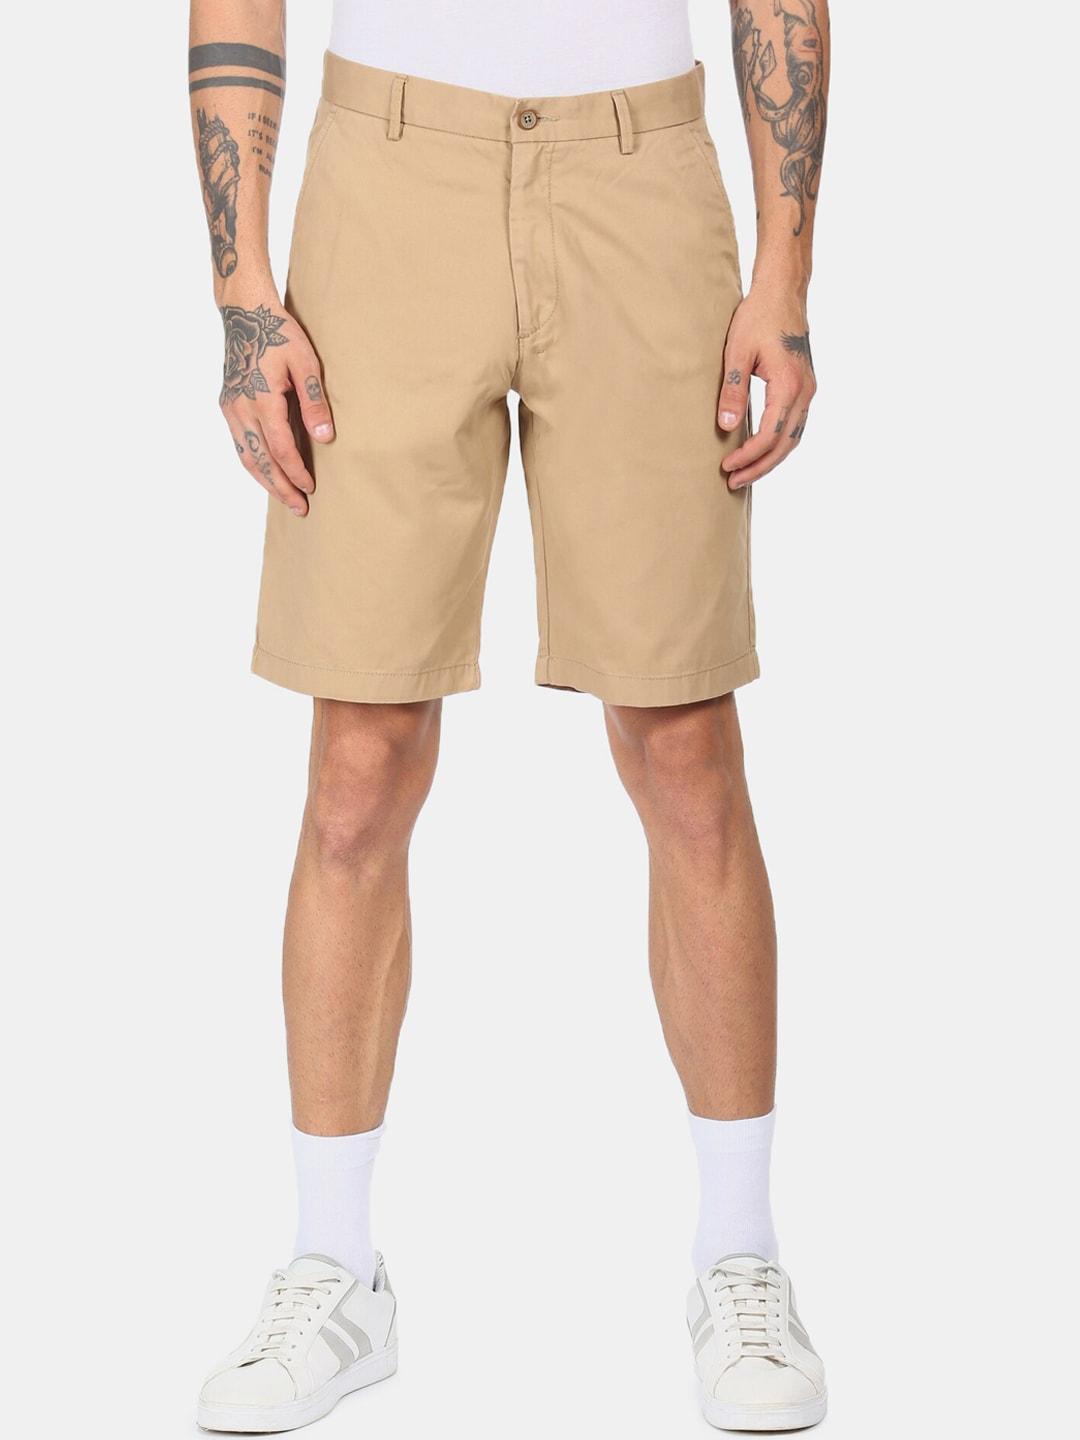 arrow-sport-men-beige-regular-shorts